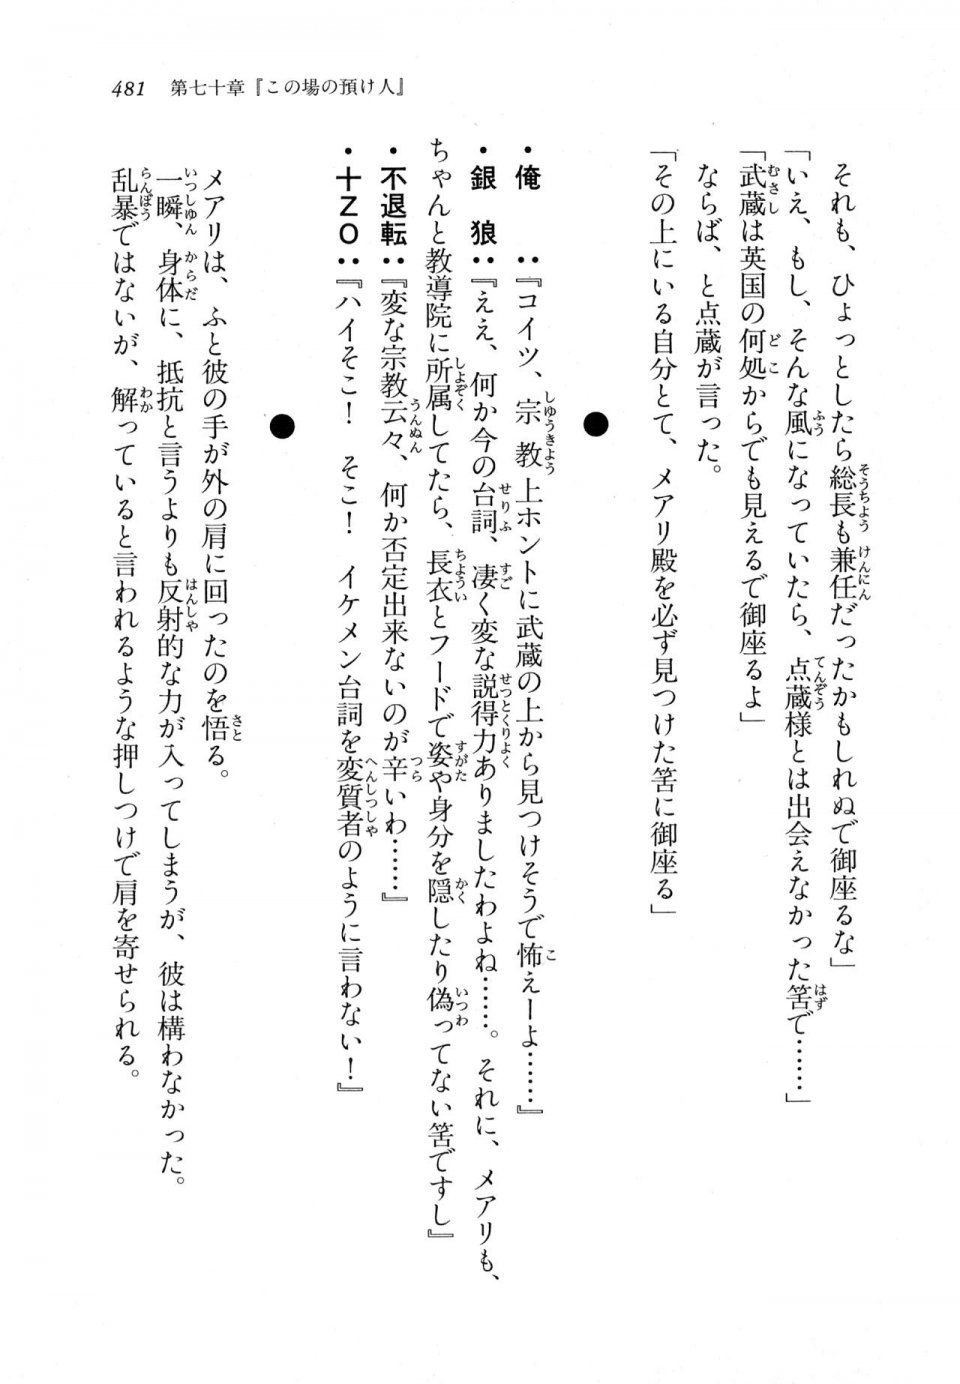 Kyoukai Senjou no Horizon LN Vol 18(7C) Part 1 - Photo #481